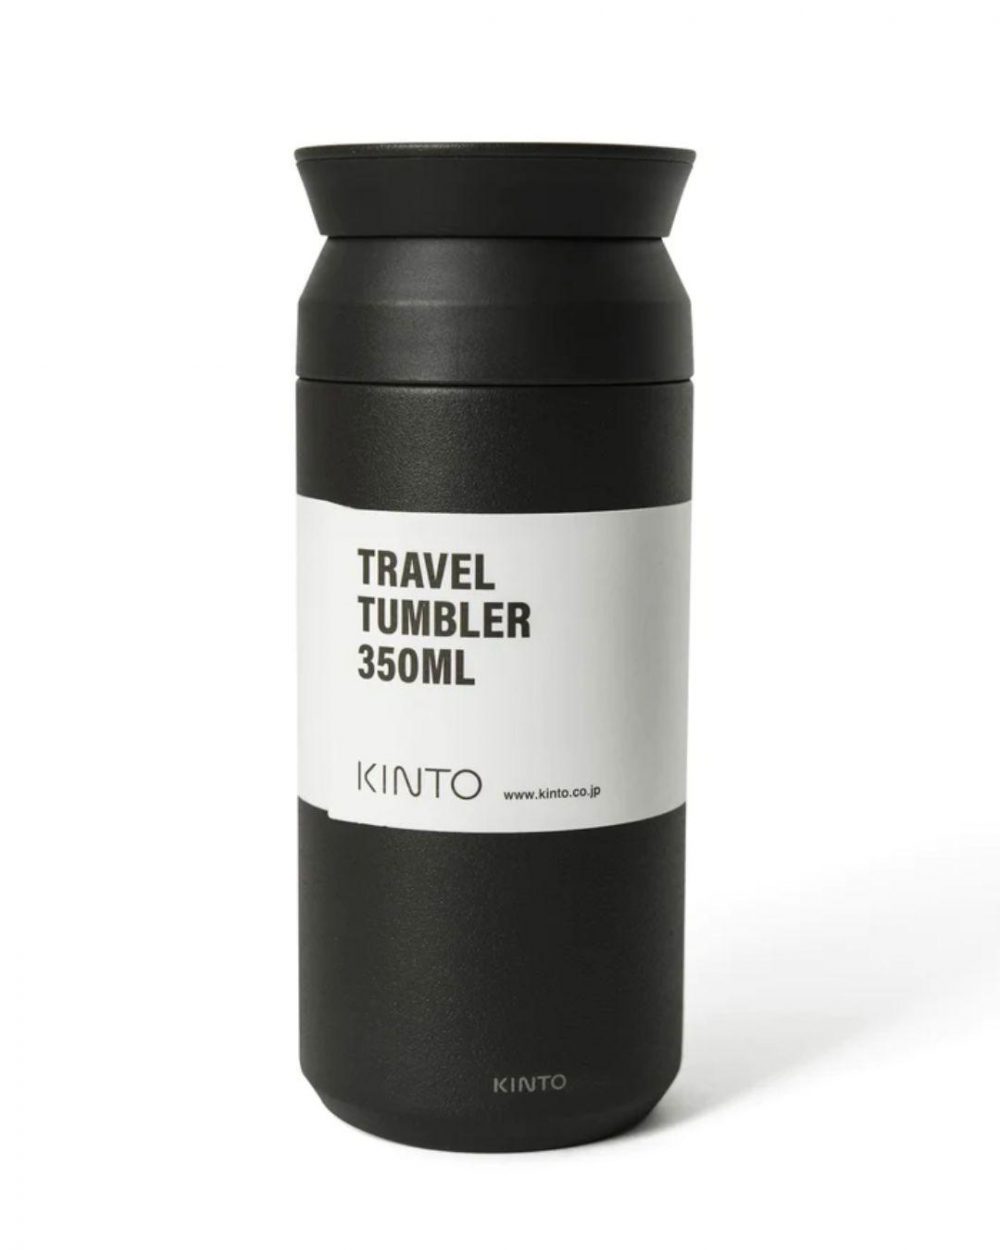 Kinto Travel Tumbler Blog